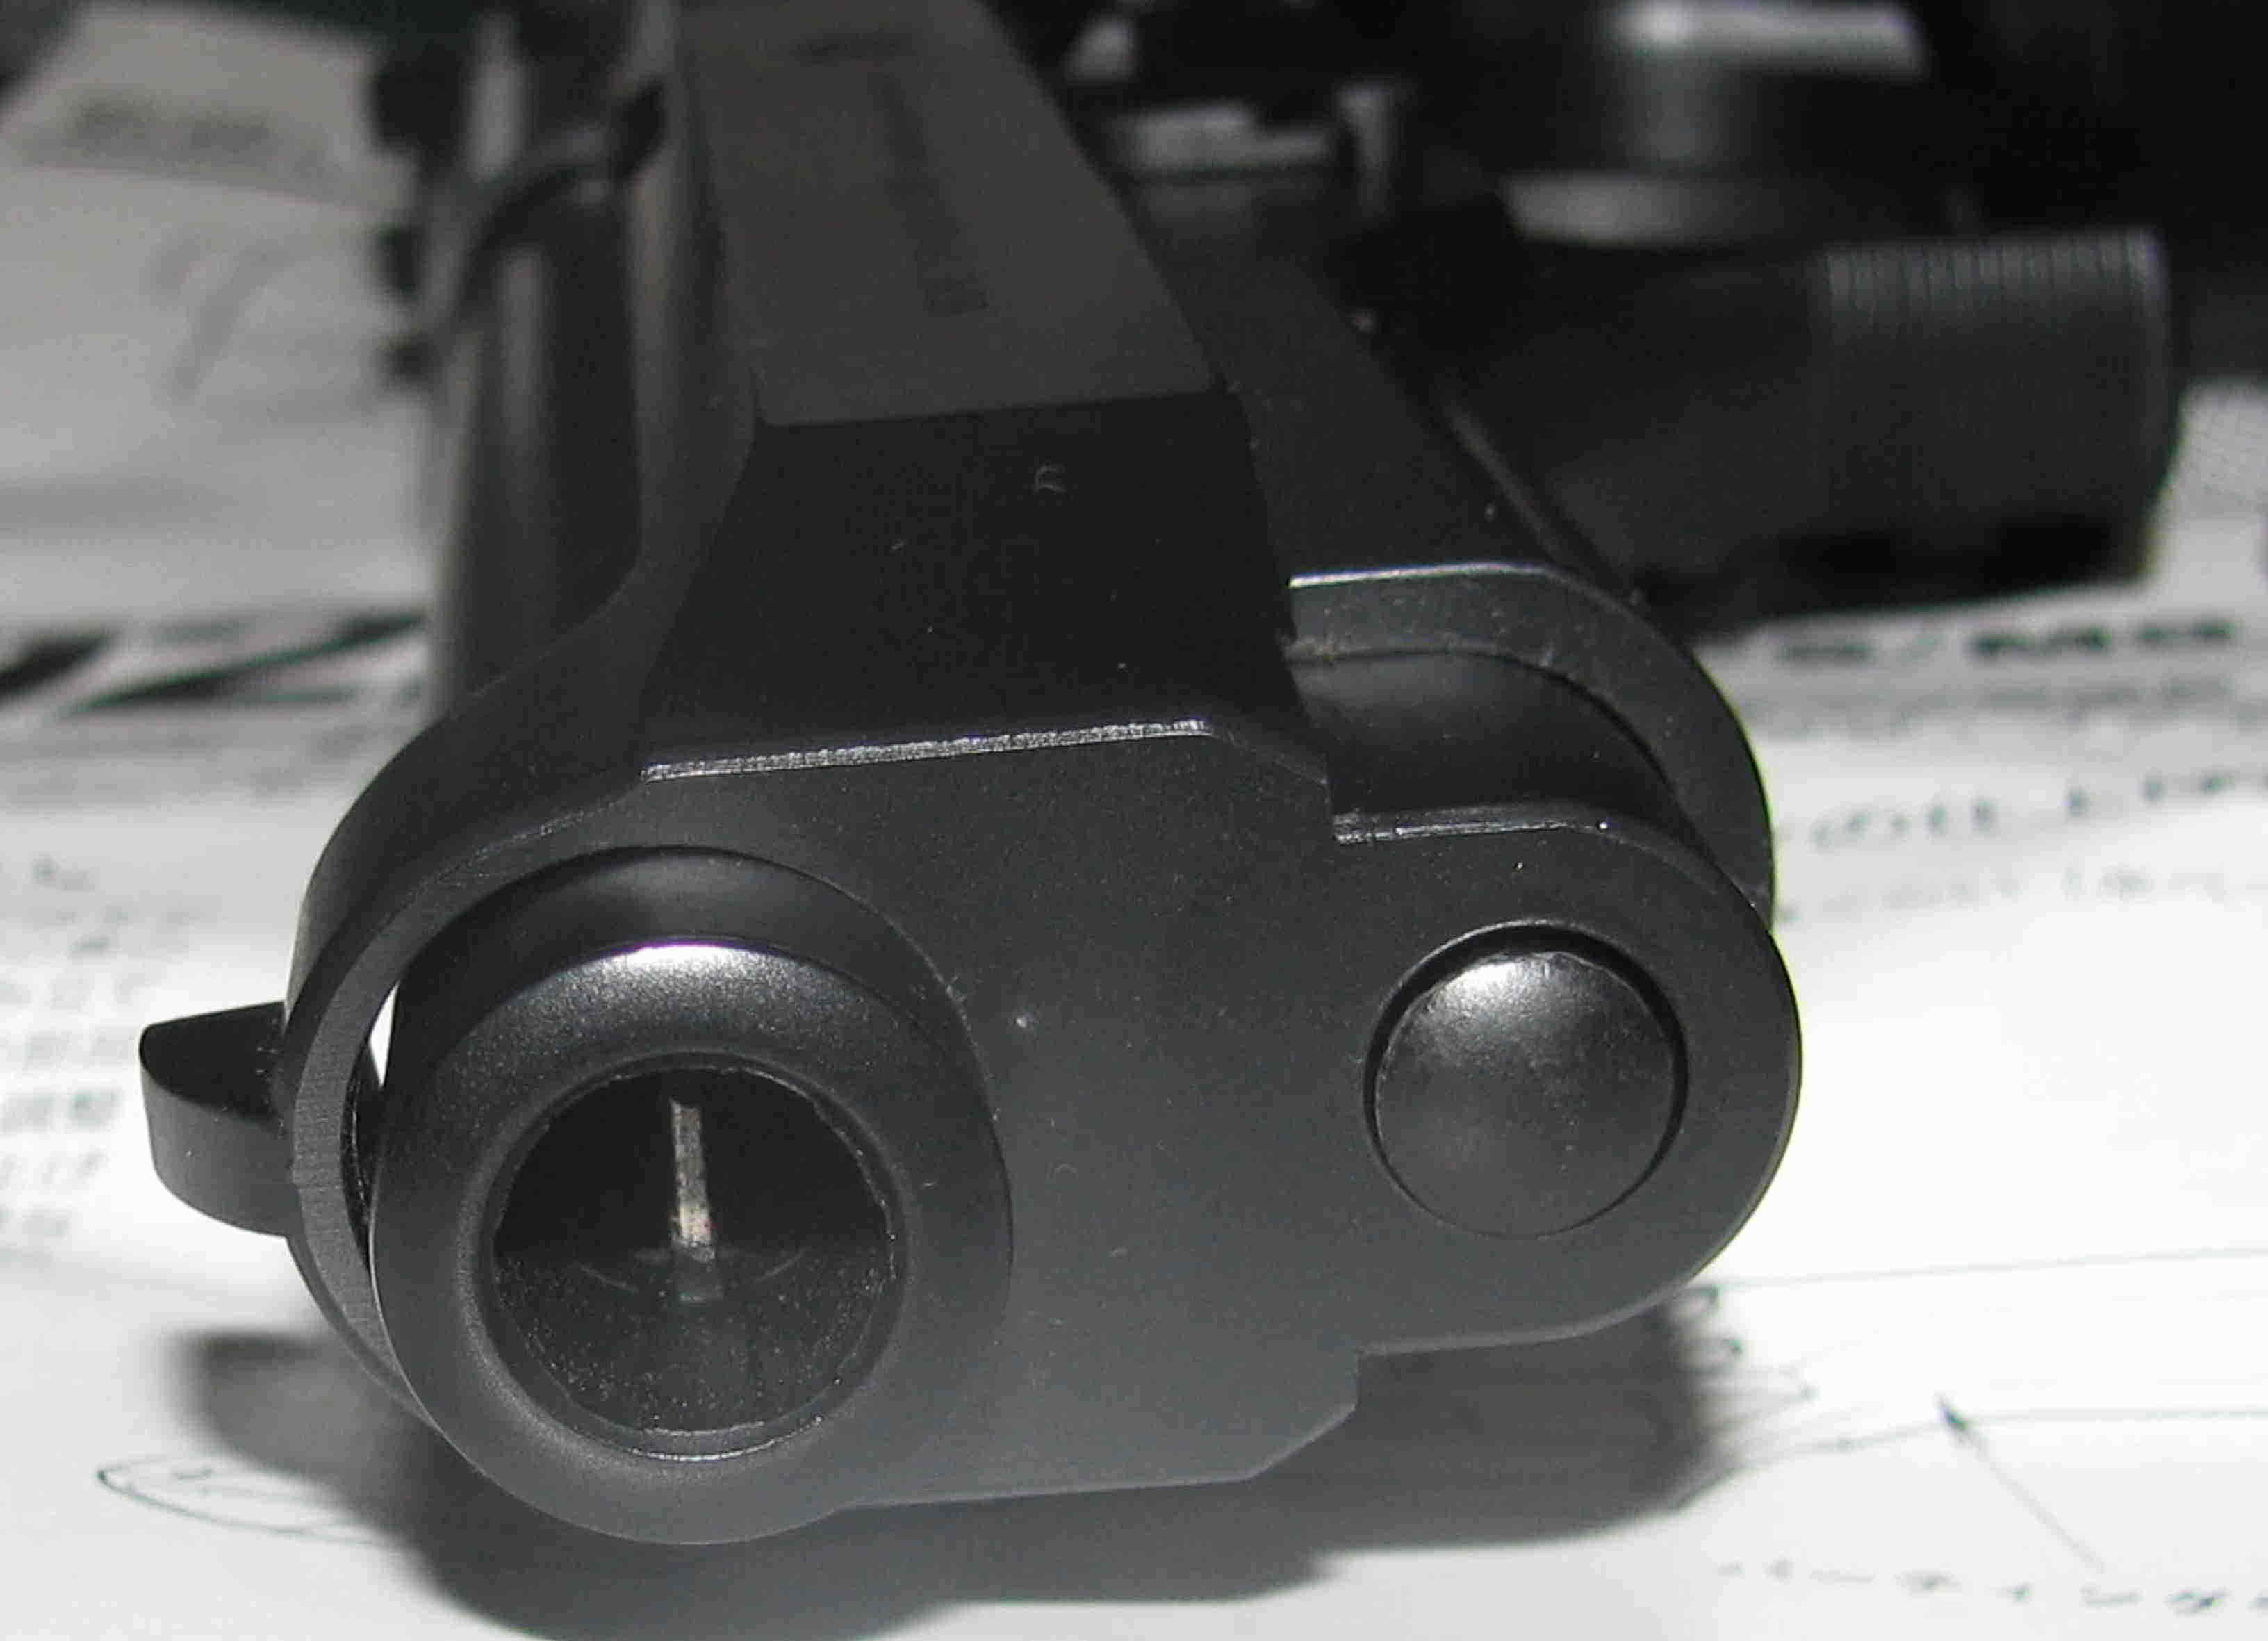 Beretta M92F от Мarushin PFC model gun Коллекционная сигнальная (шумовая) модель Беретта 92